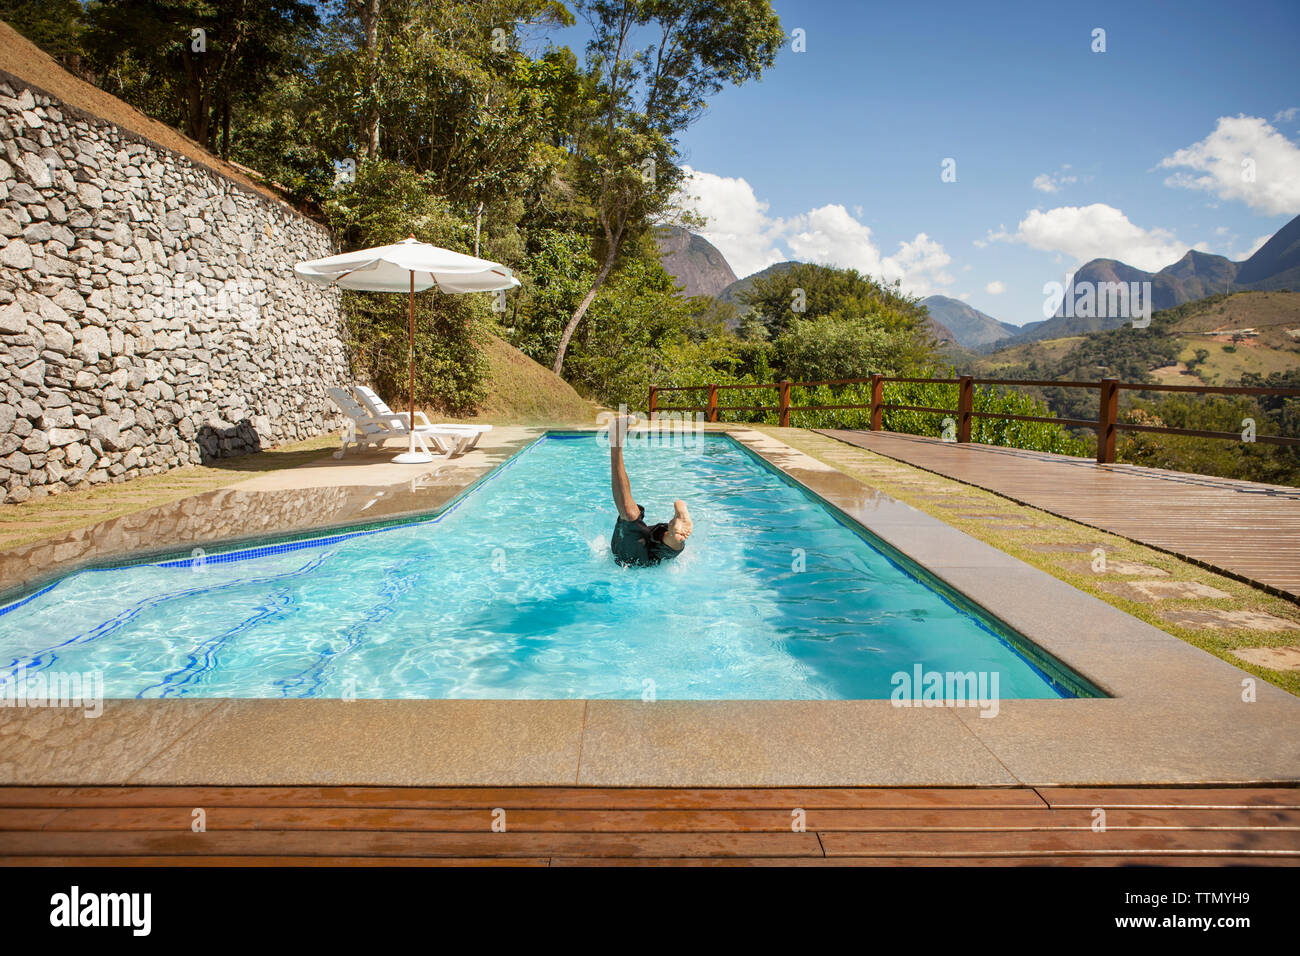 Man diving into swimming pool at tourist resort Stock Photo